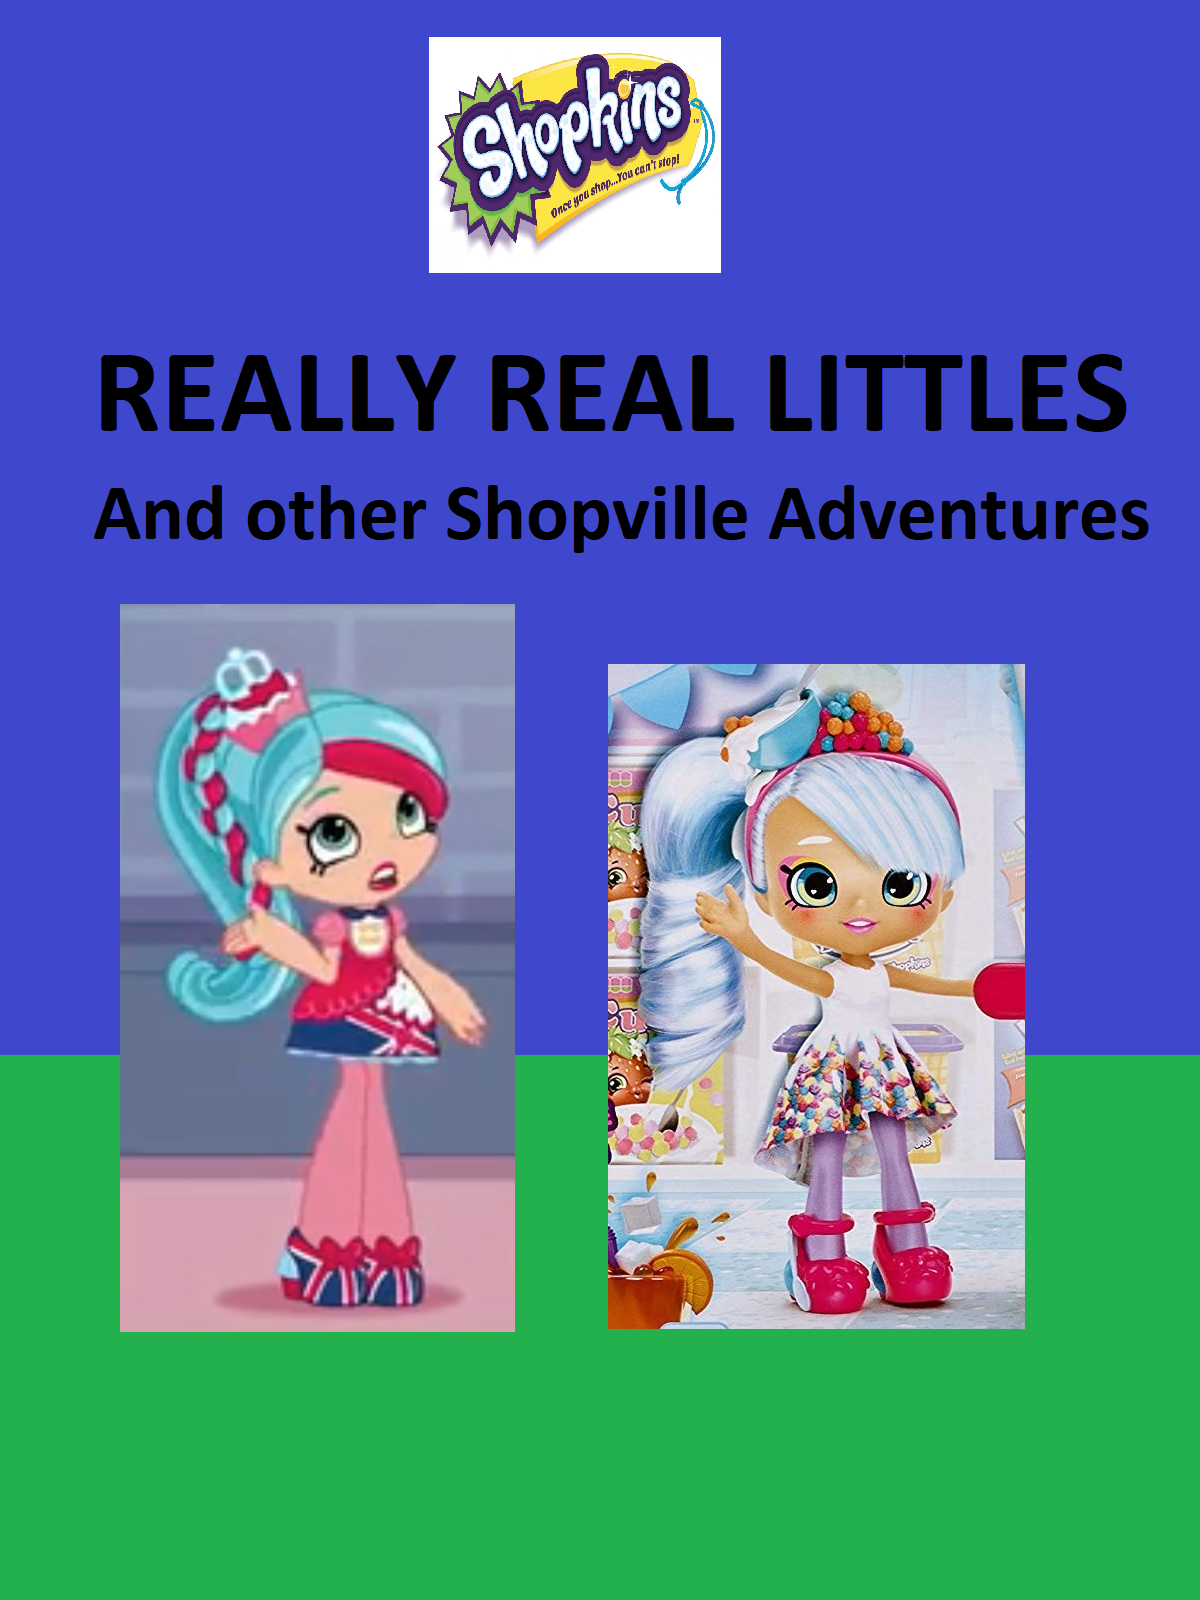 Real Littles Shopkins - Wikipedia